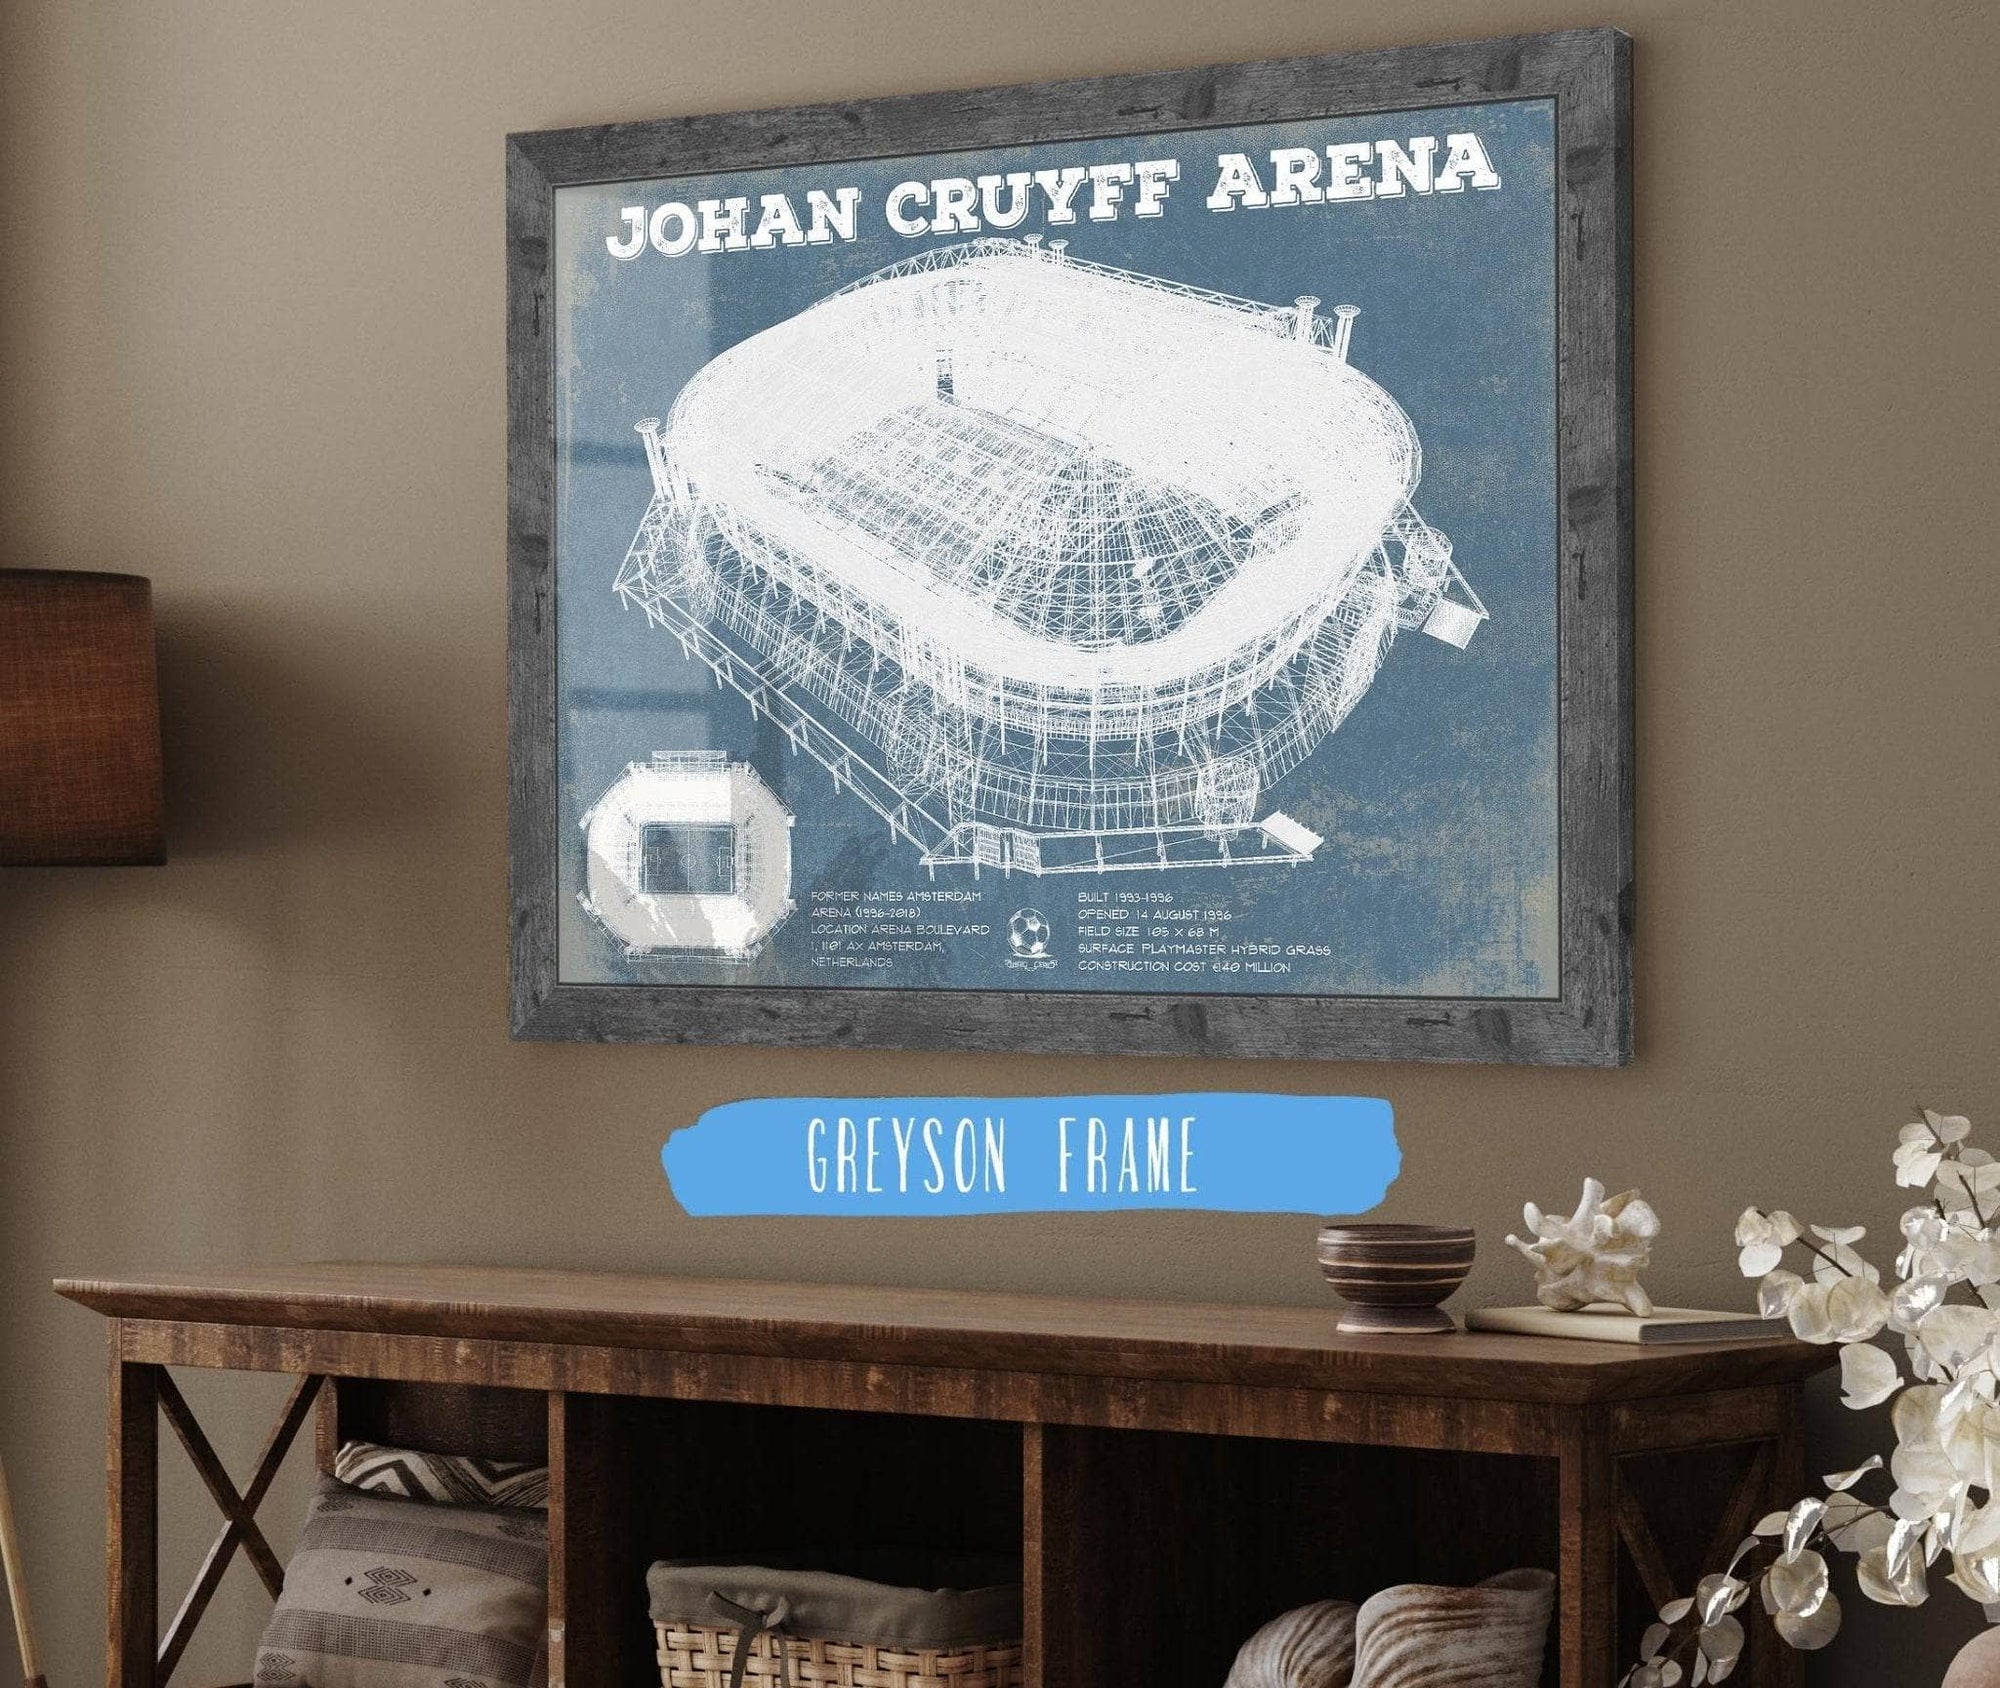 Cutler West Soccer Collection AFC Ajax FC Johan Cruyff Arena Soccer Print